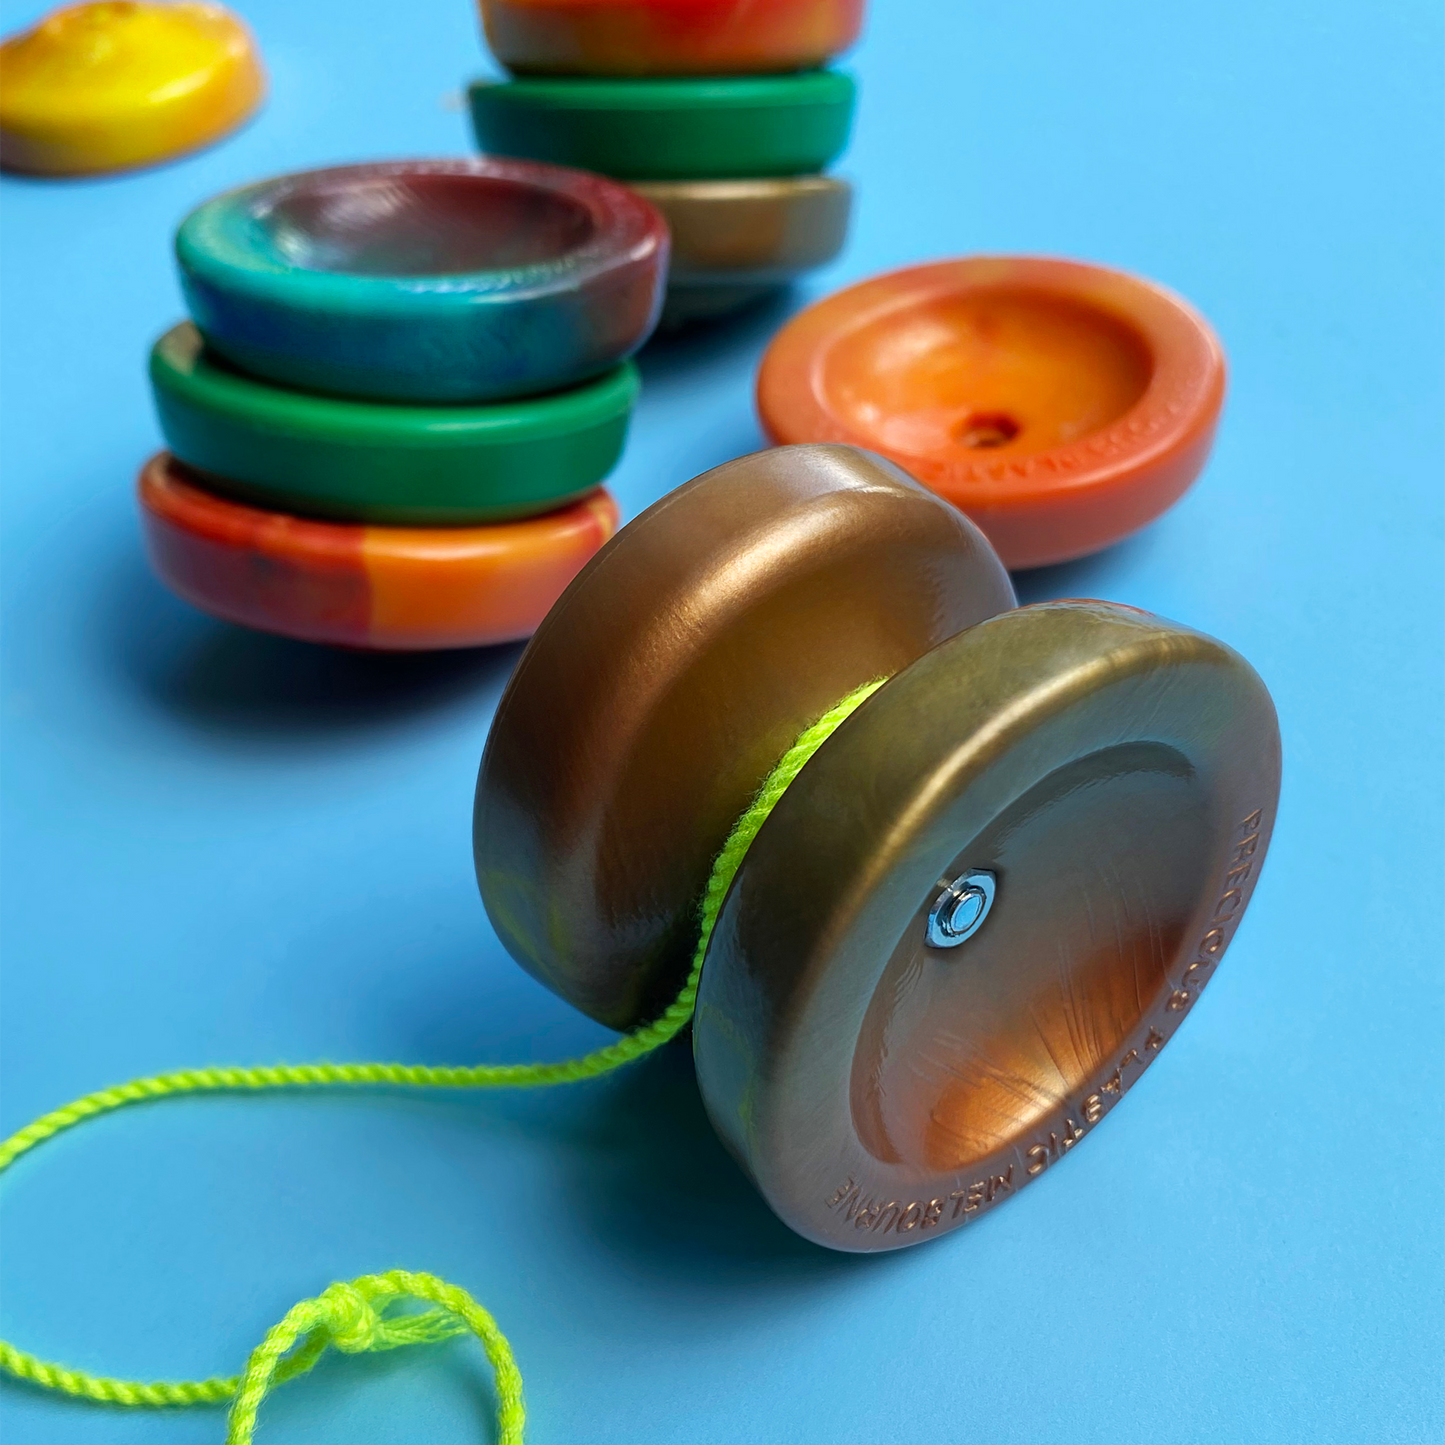 Yo-Yo Mold by Precious Plastic Melbourne! Our aluminium mould (mold) transforms plastic waste into epic yo-yos.